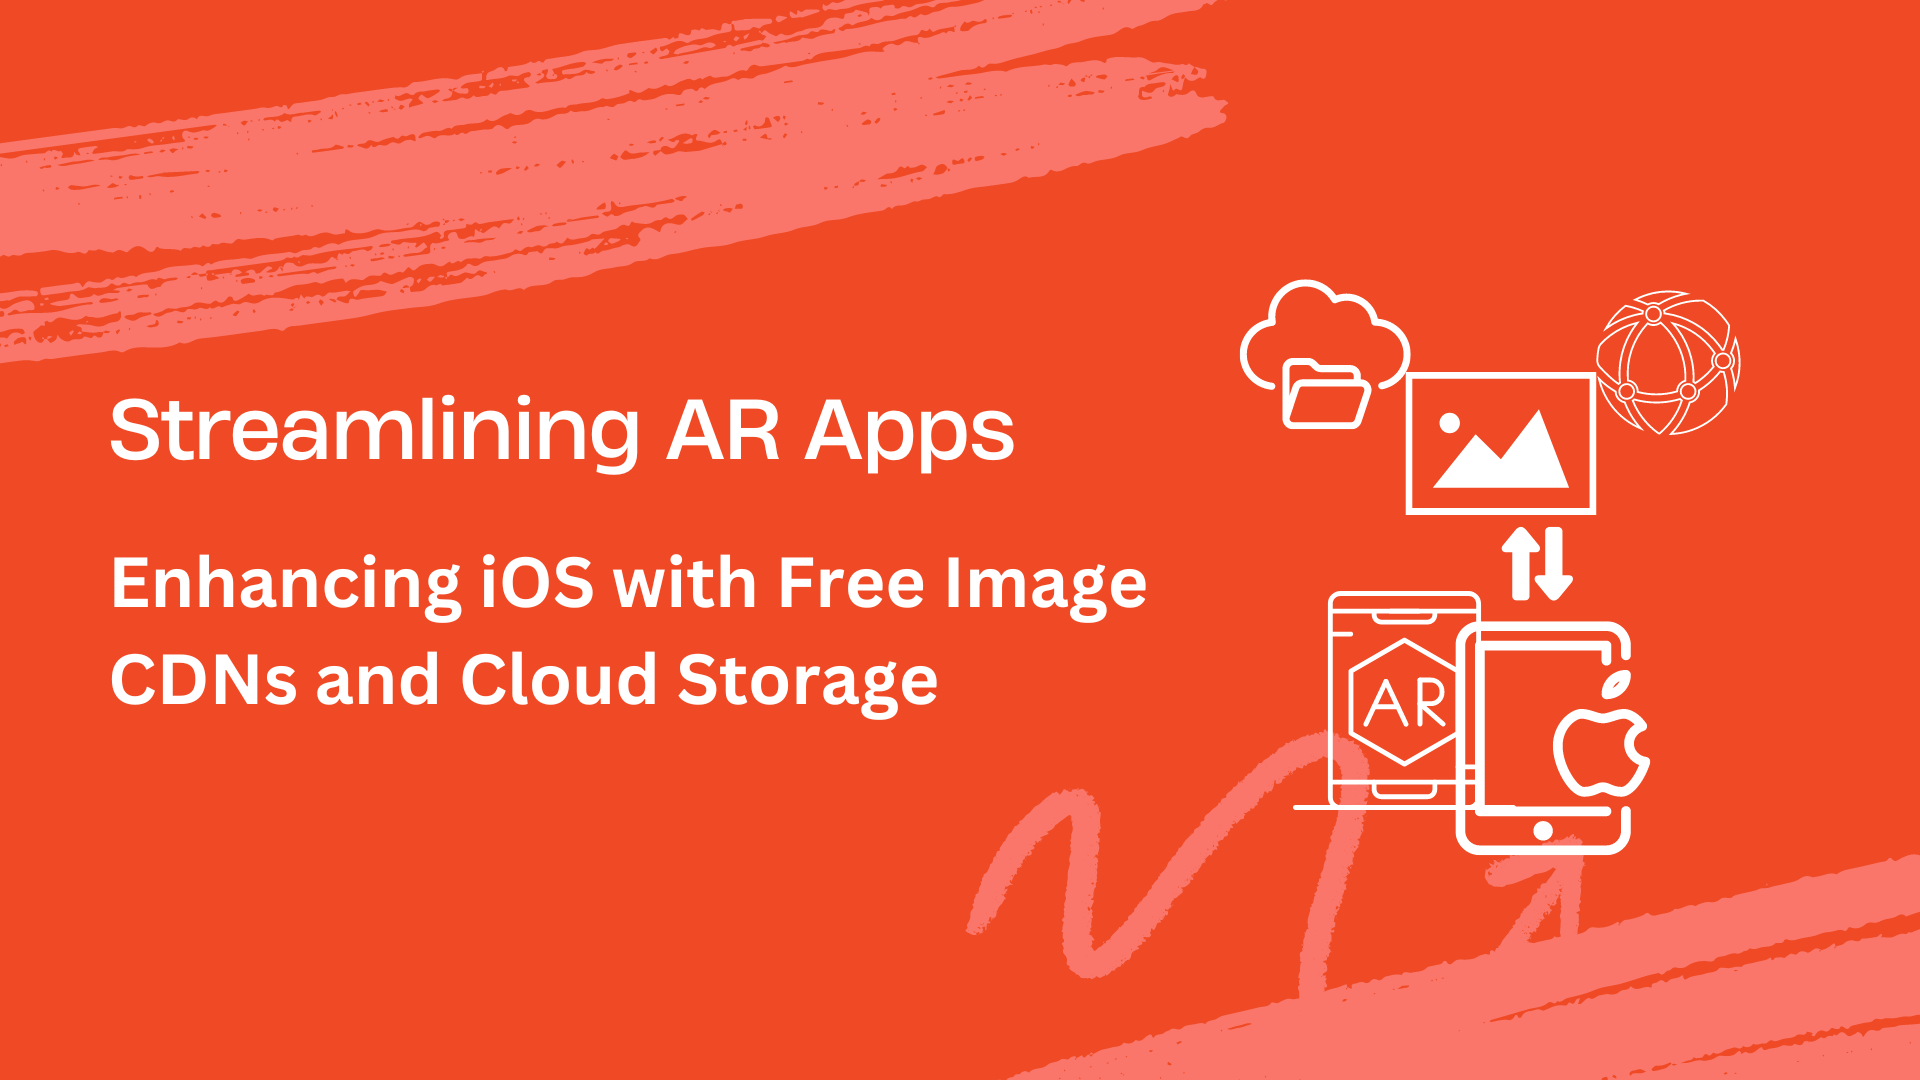 Streamlining AR Apps Enhancing iOS with Free Image CDNs and Cloud Storage